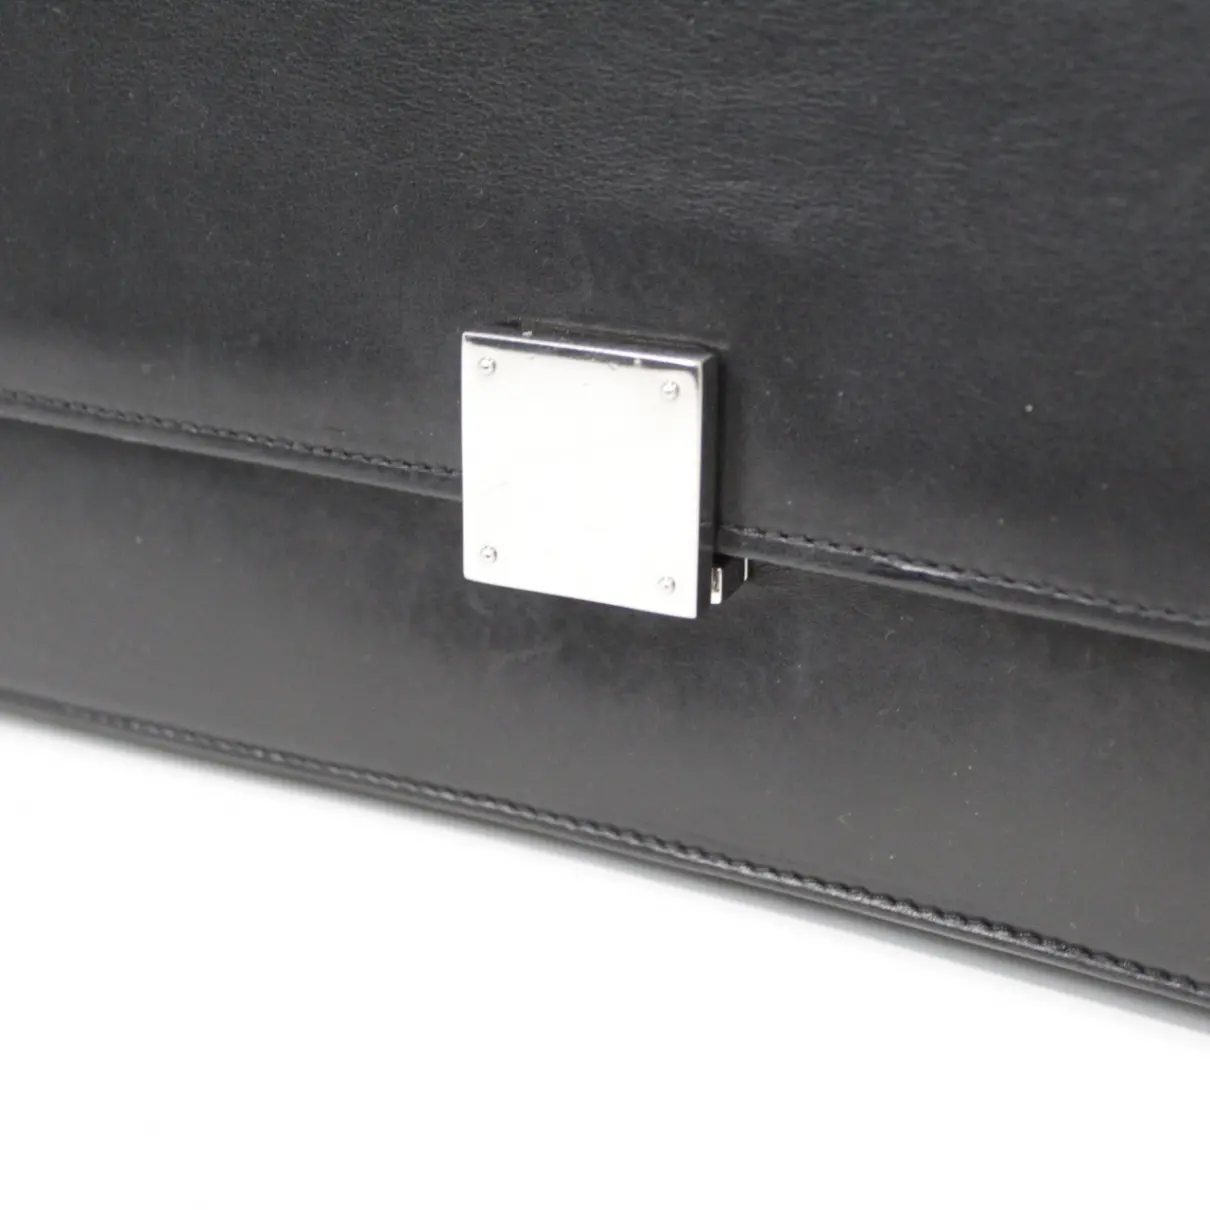 Case flap leather handbag Celine